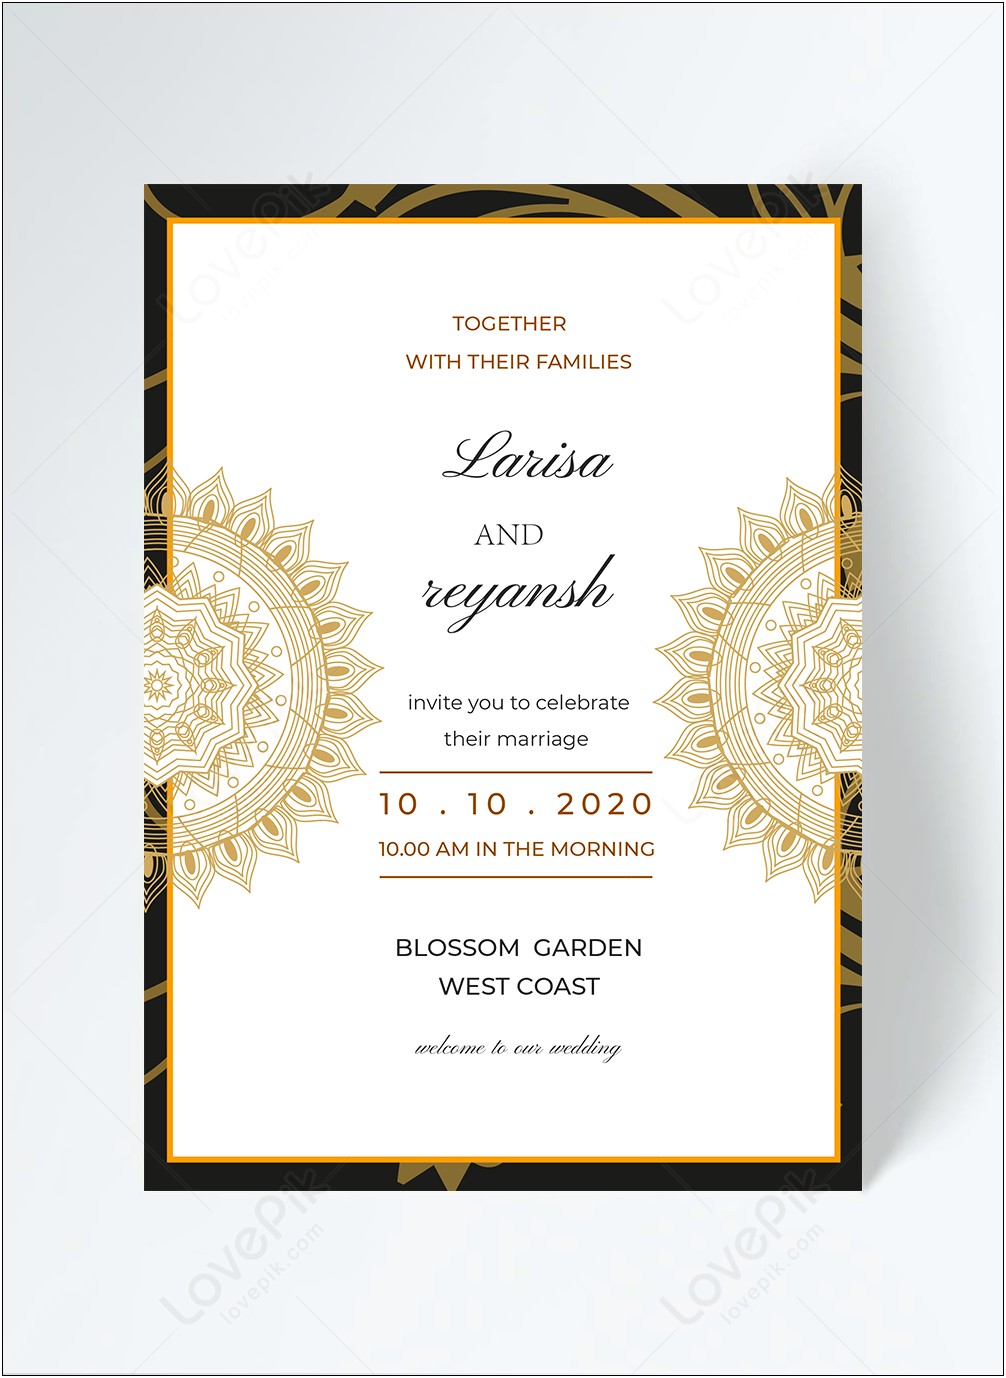 Adobe Premiere Indian Wedding Invitation Templates Free Download